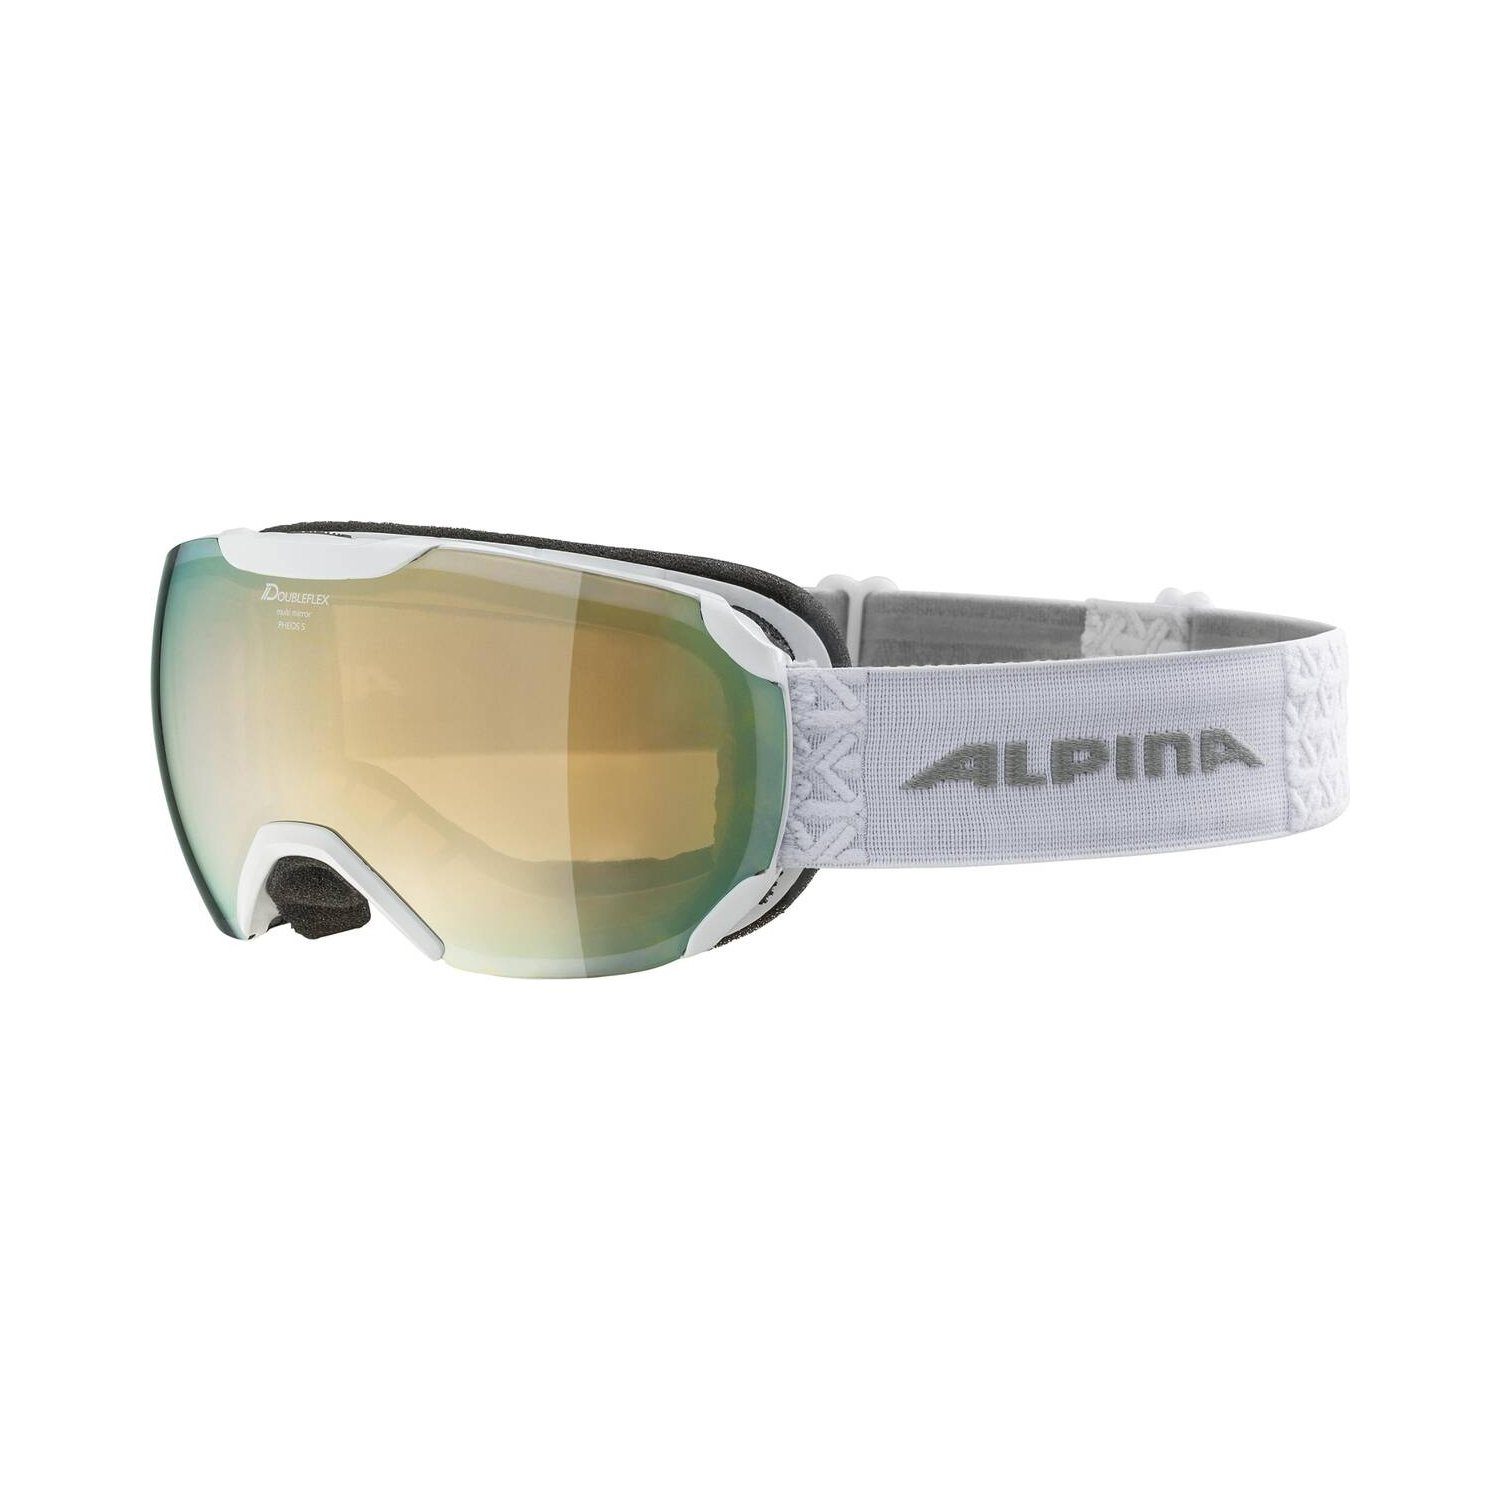 Alpina Sports Alpina Skibrille Herren white-coral Skibrille - S HM Pheos / 815 